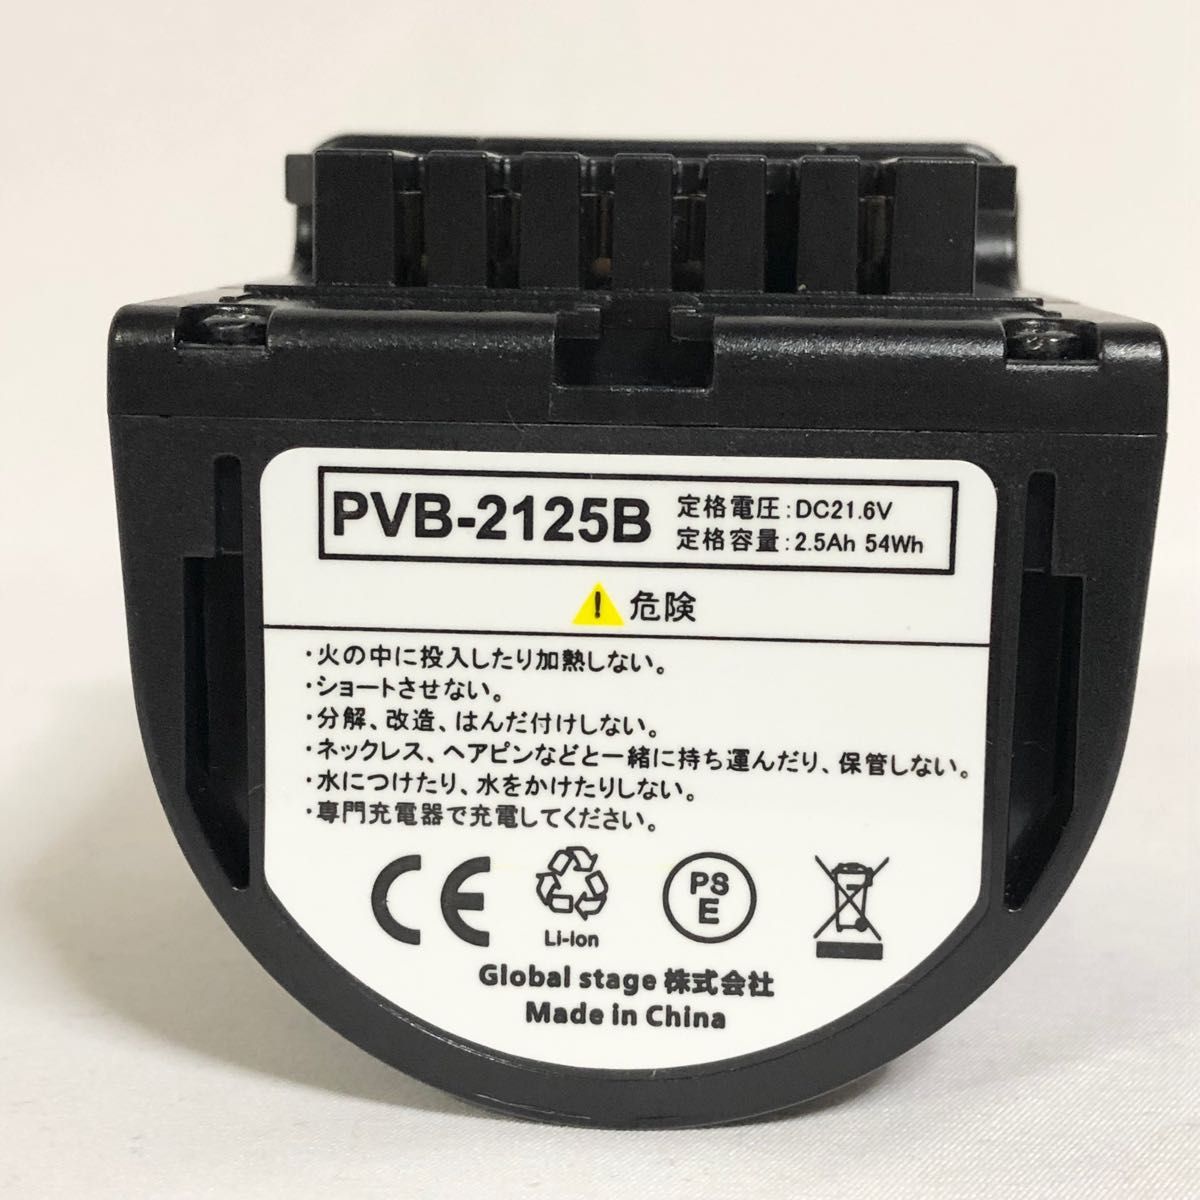 Gstage pvb-2125b 互換バッテリー PV-BEH900009 | www.myglobaltax.com